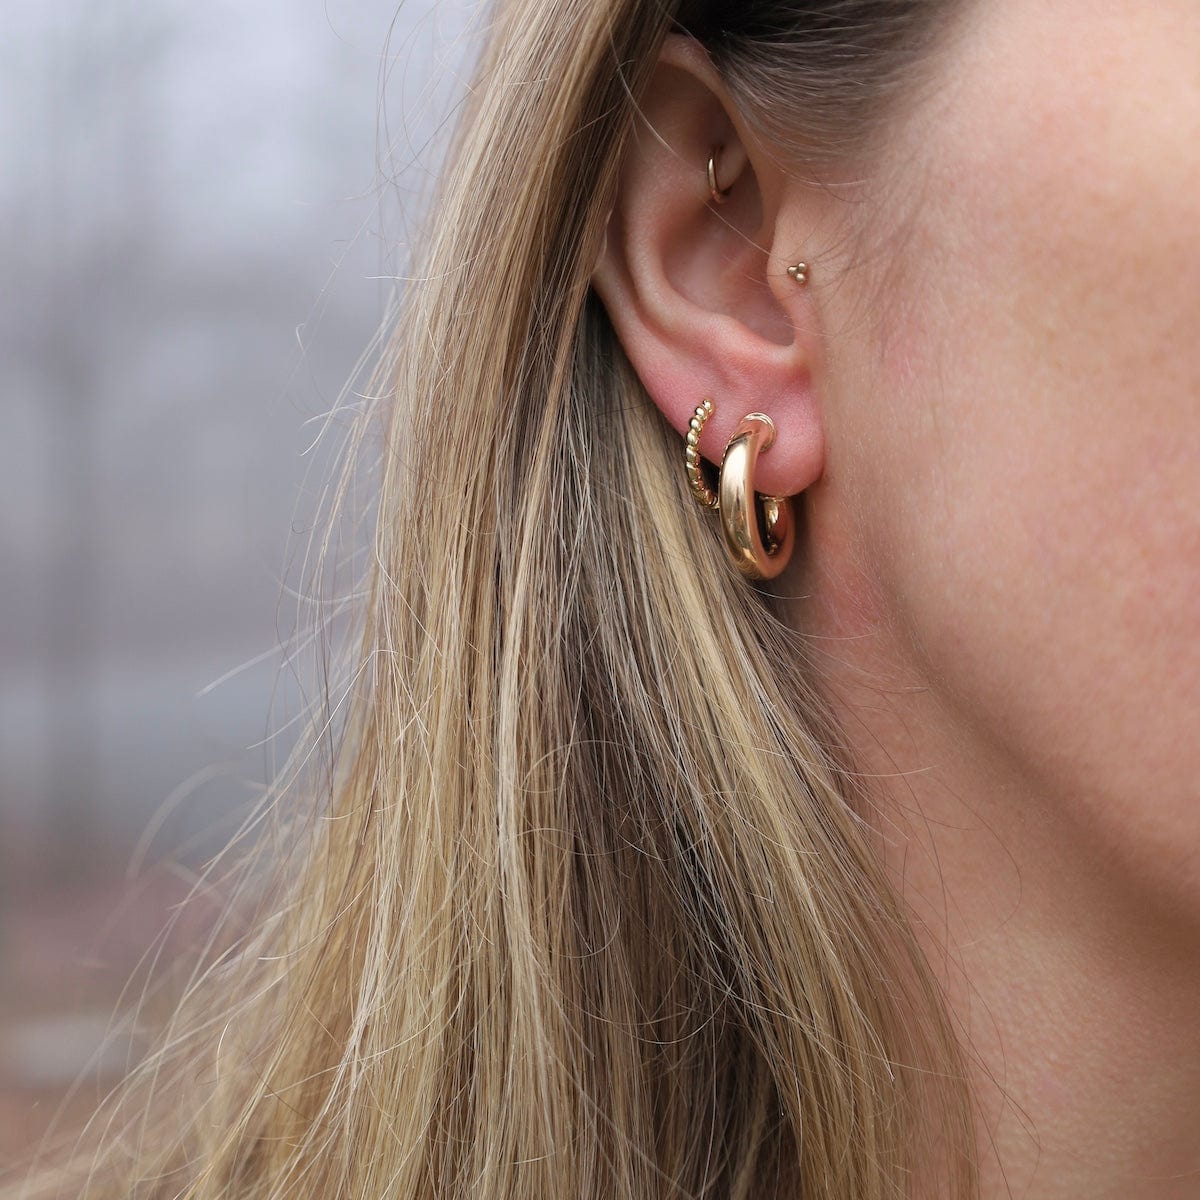 EAR-GF Nova Tube Hoops Earrings Gold Filled - Small